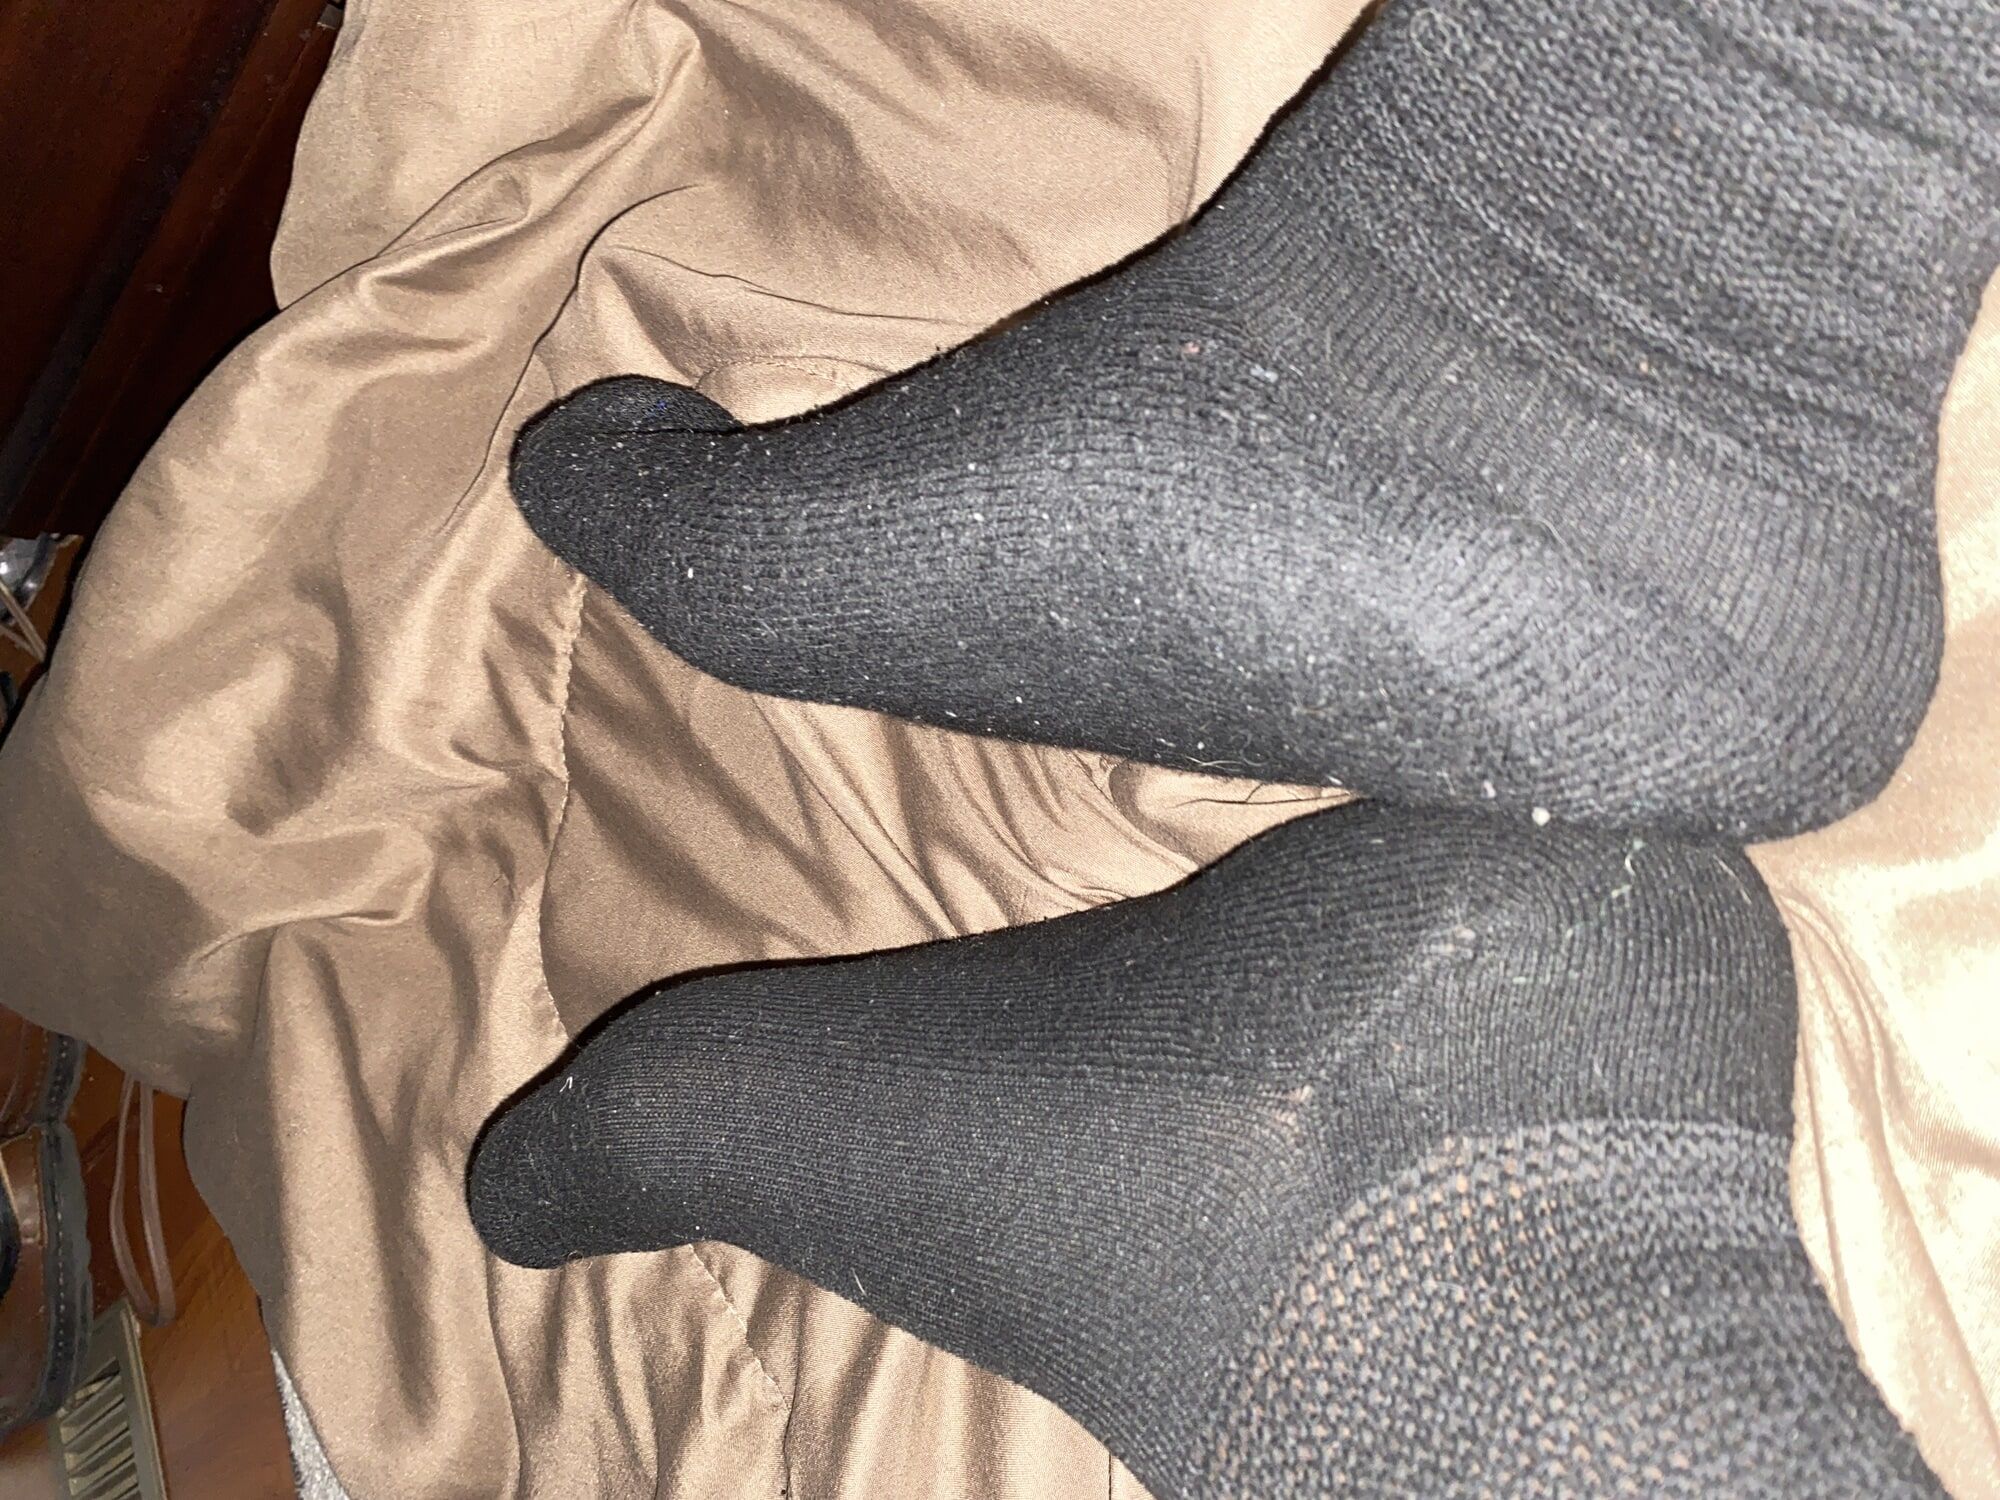 Feet and socks #2